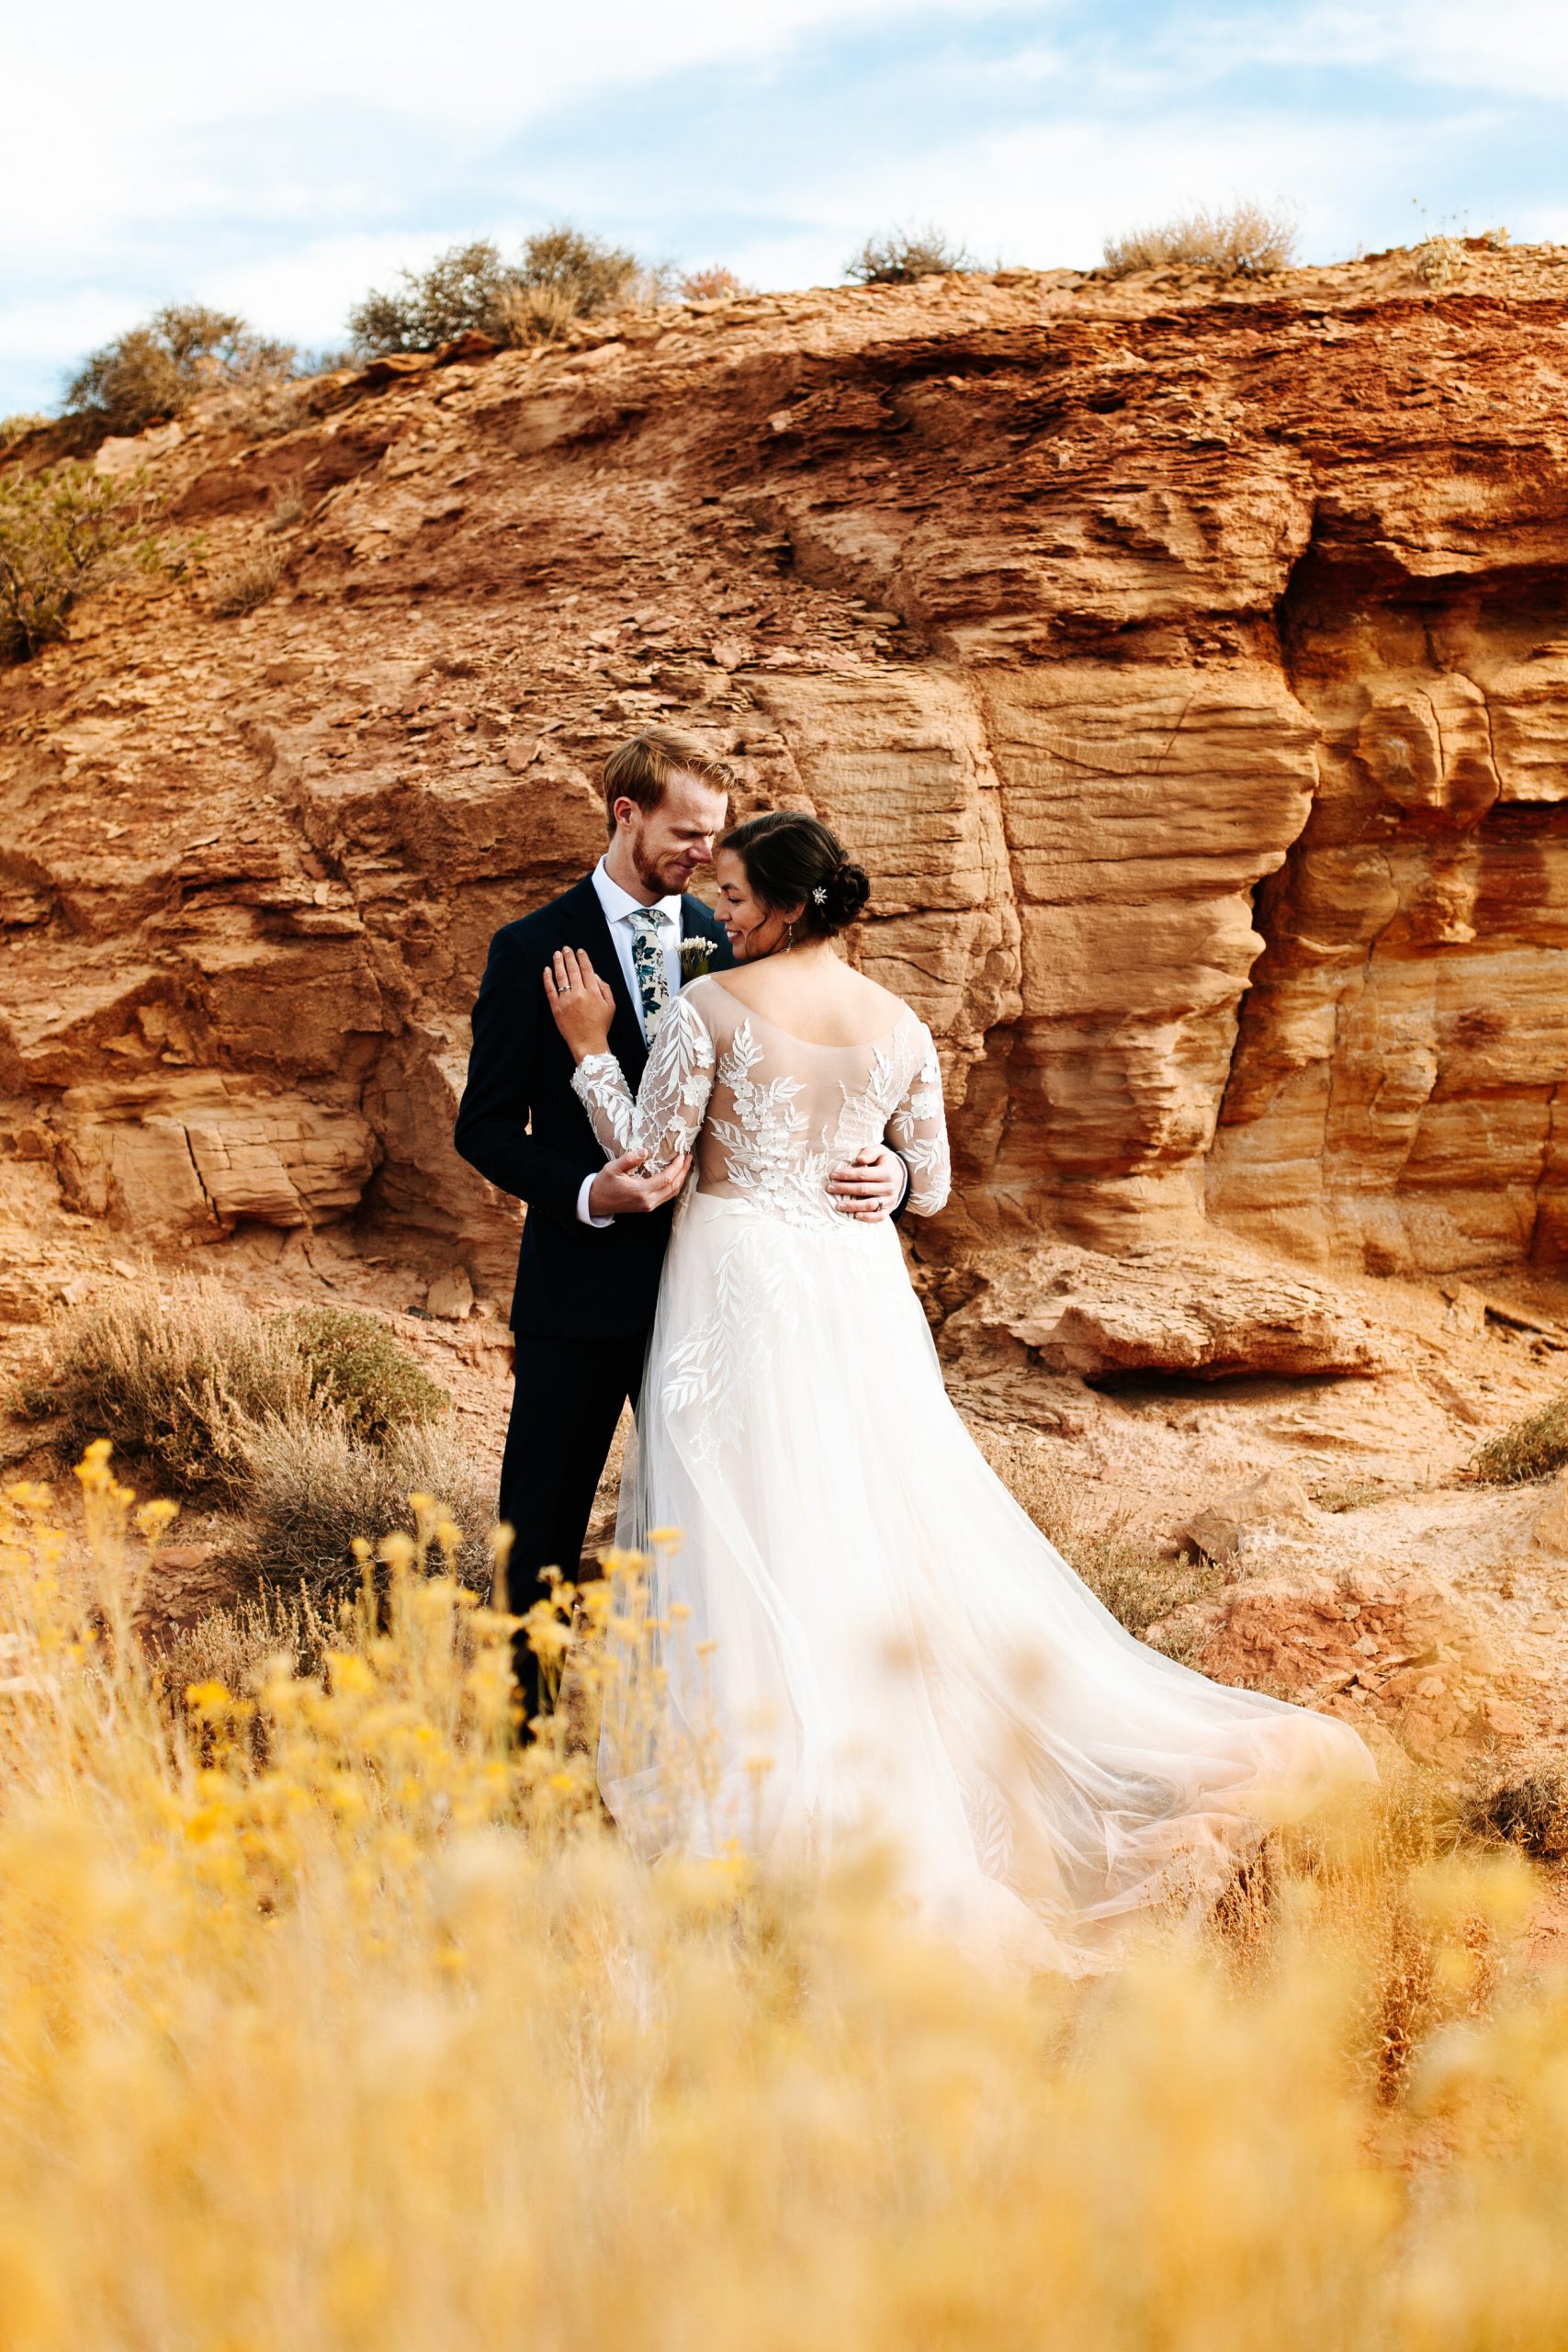 Couple at their desert wedding in Moab, Utah.